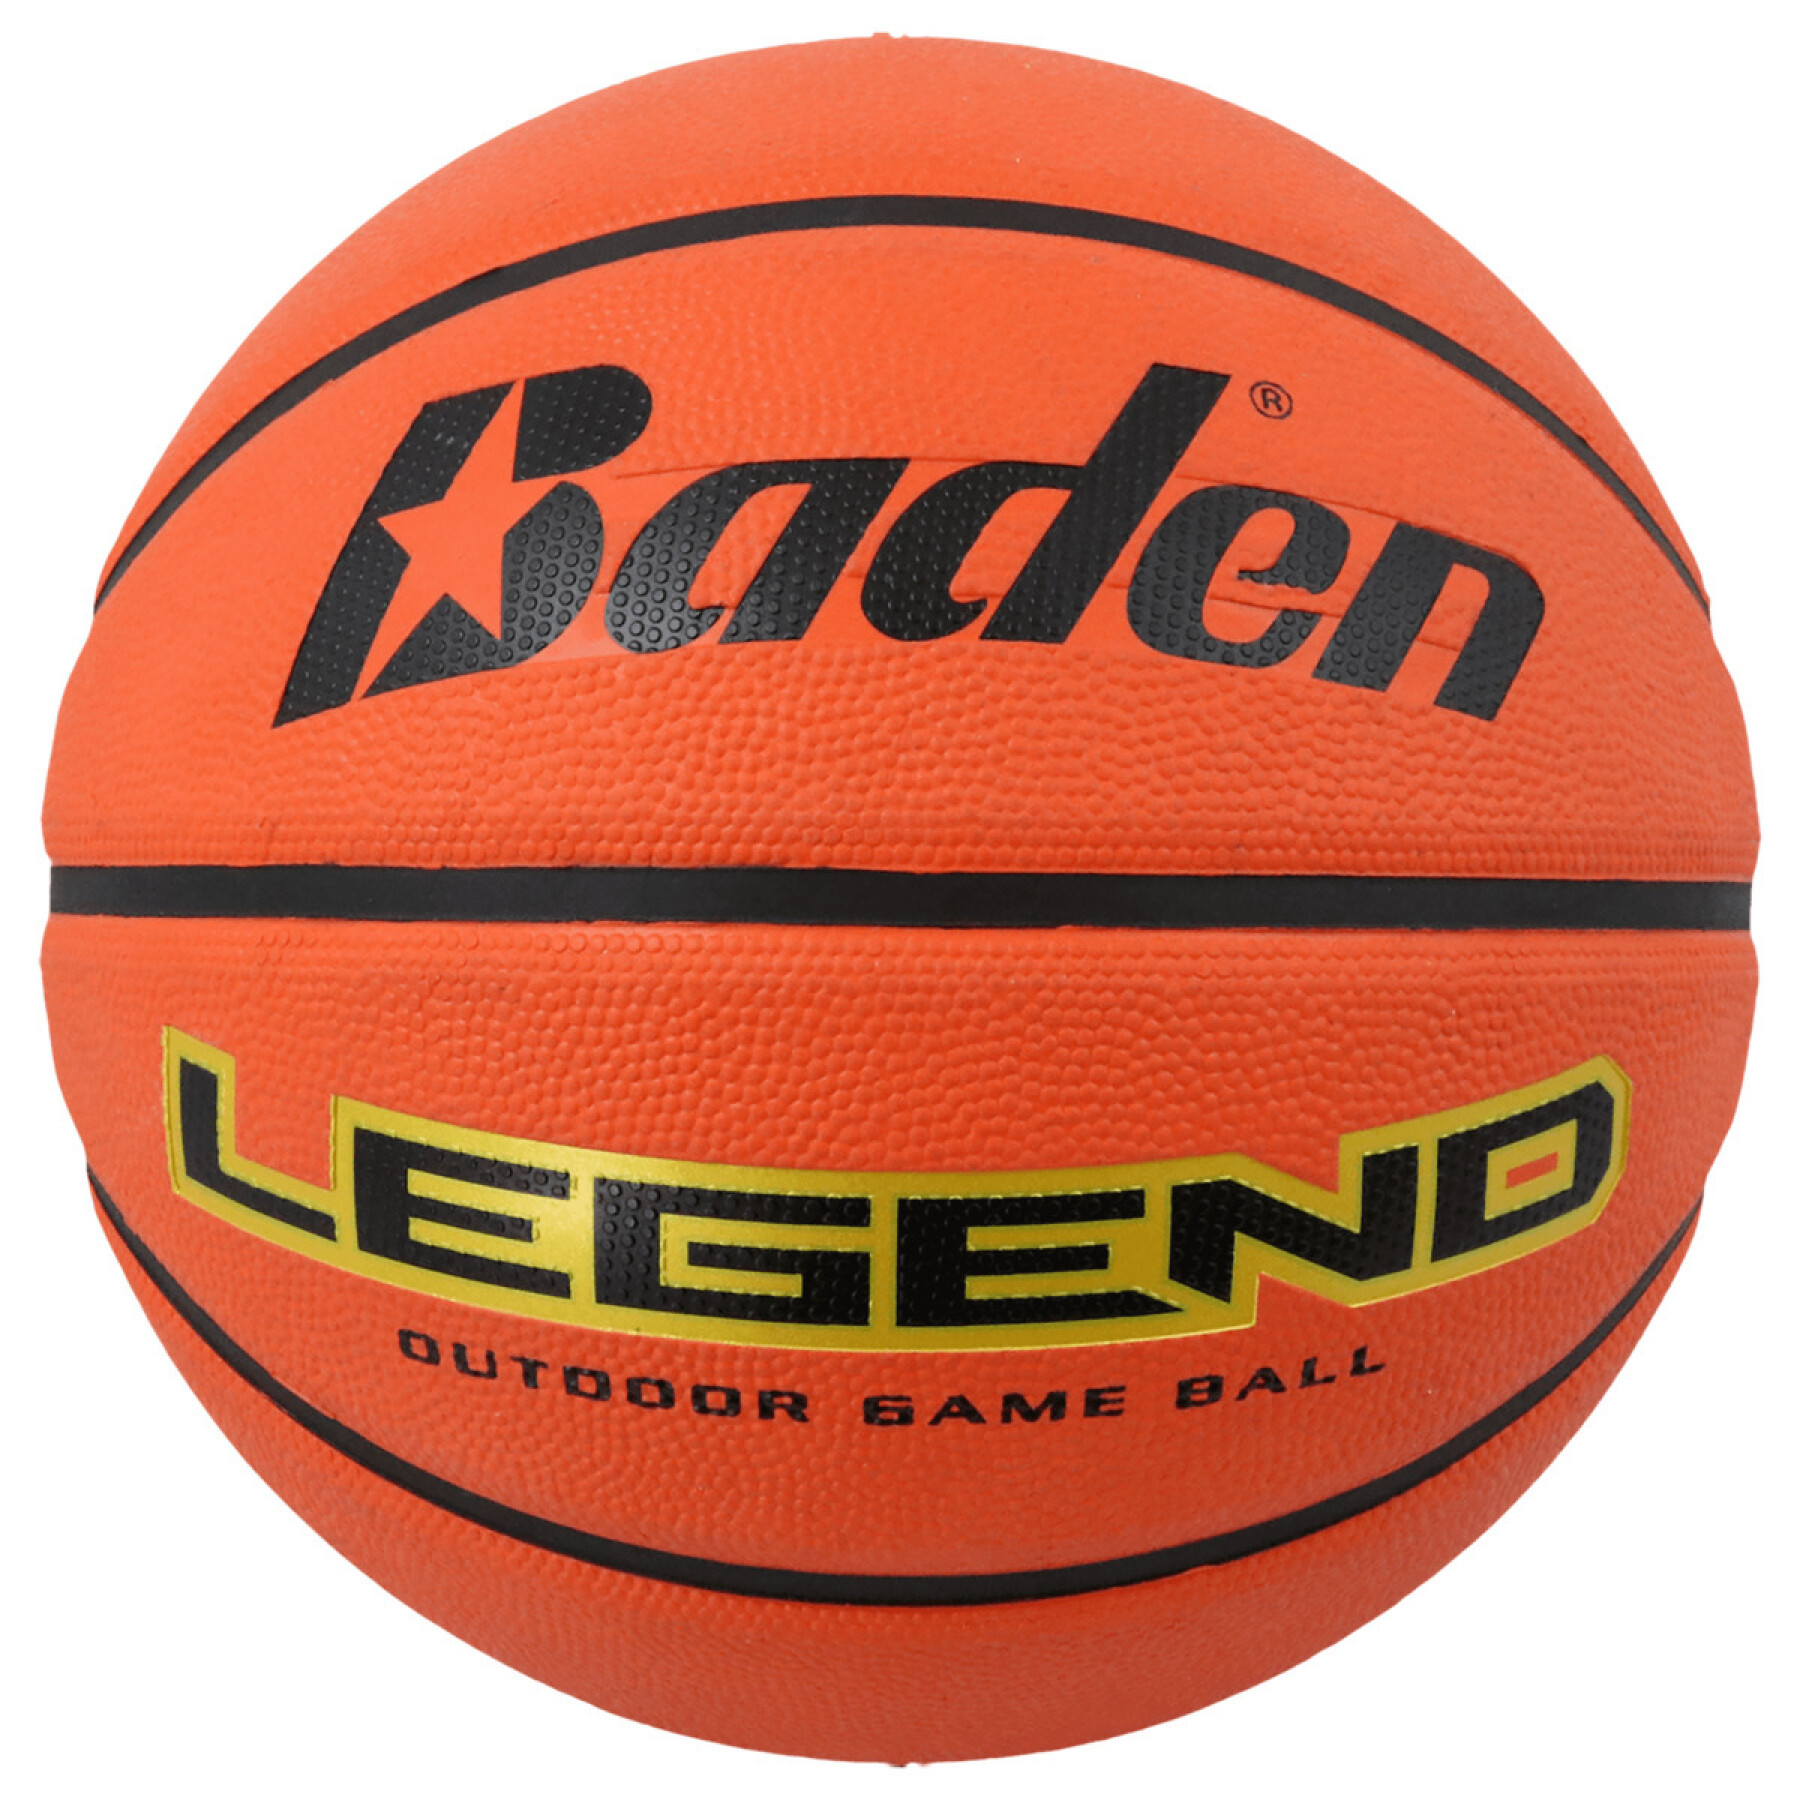 Ballon Baden Sports Legend